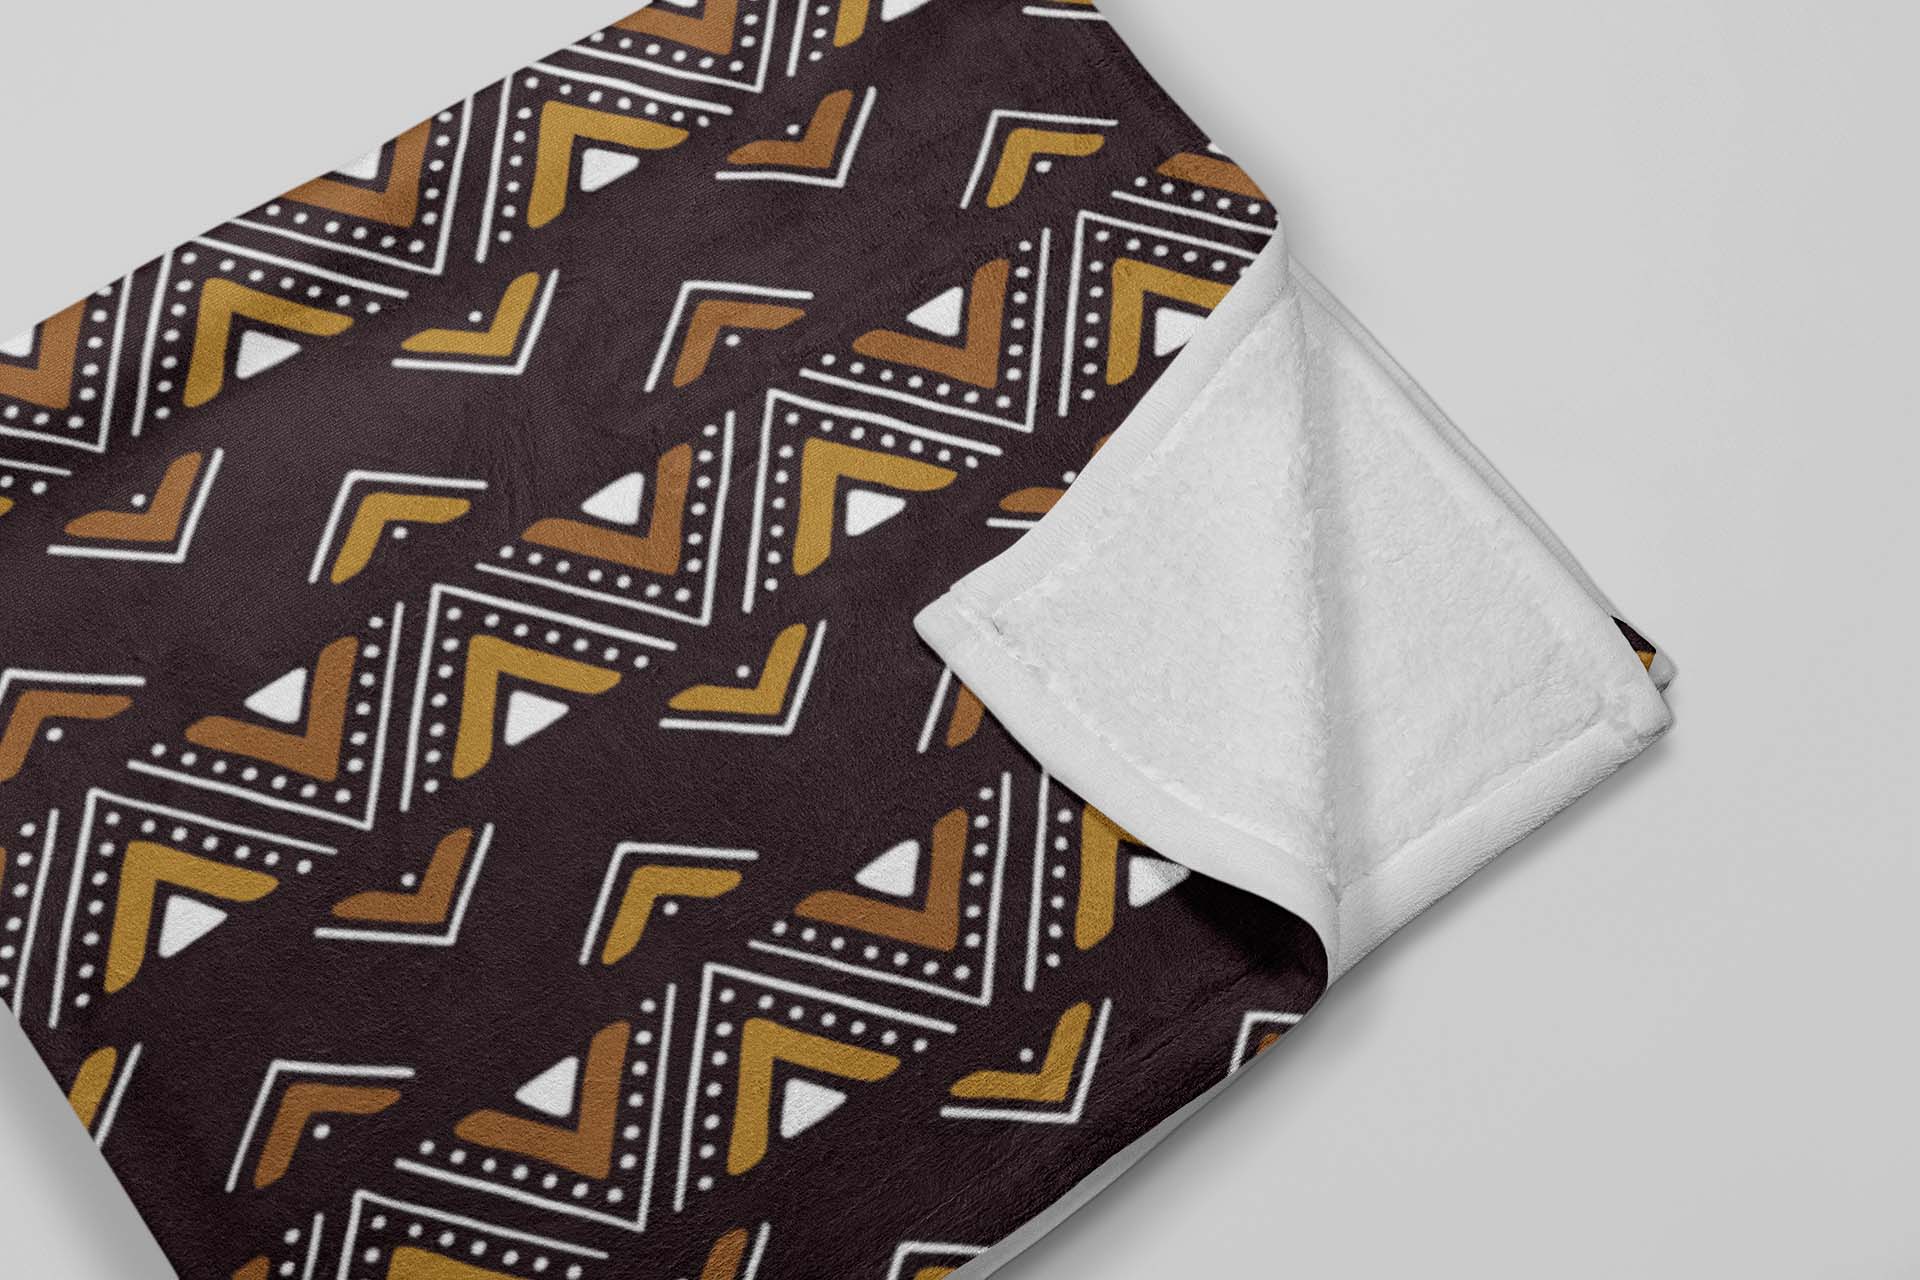 African Blanket Mudcloth Print Throw Fleece Brown